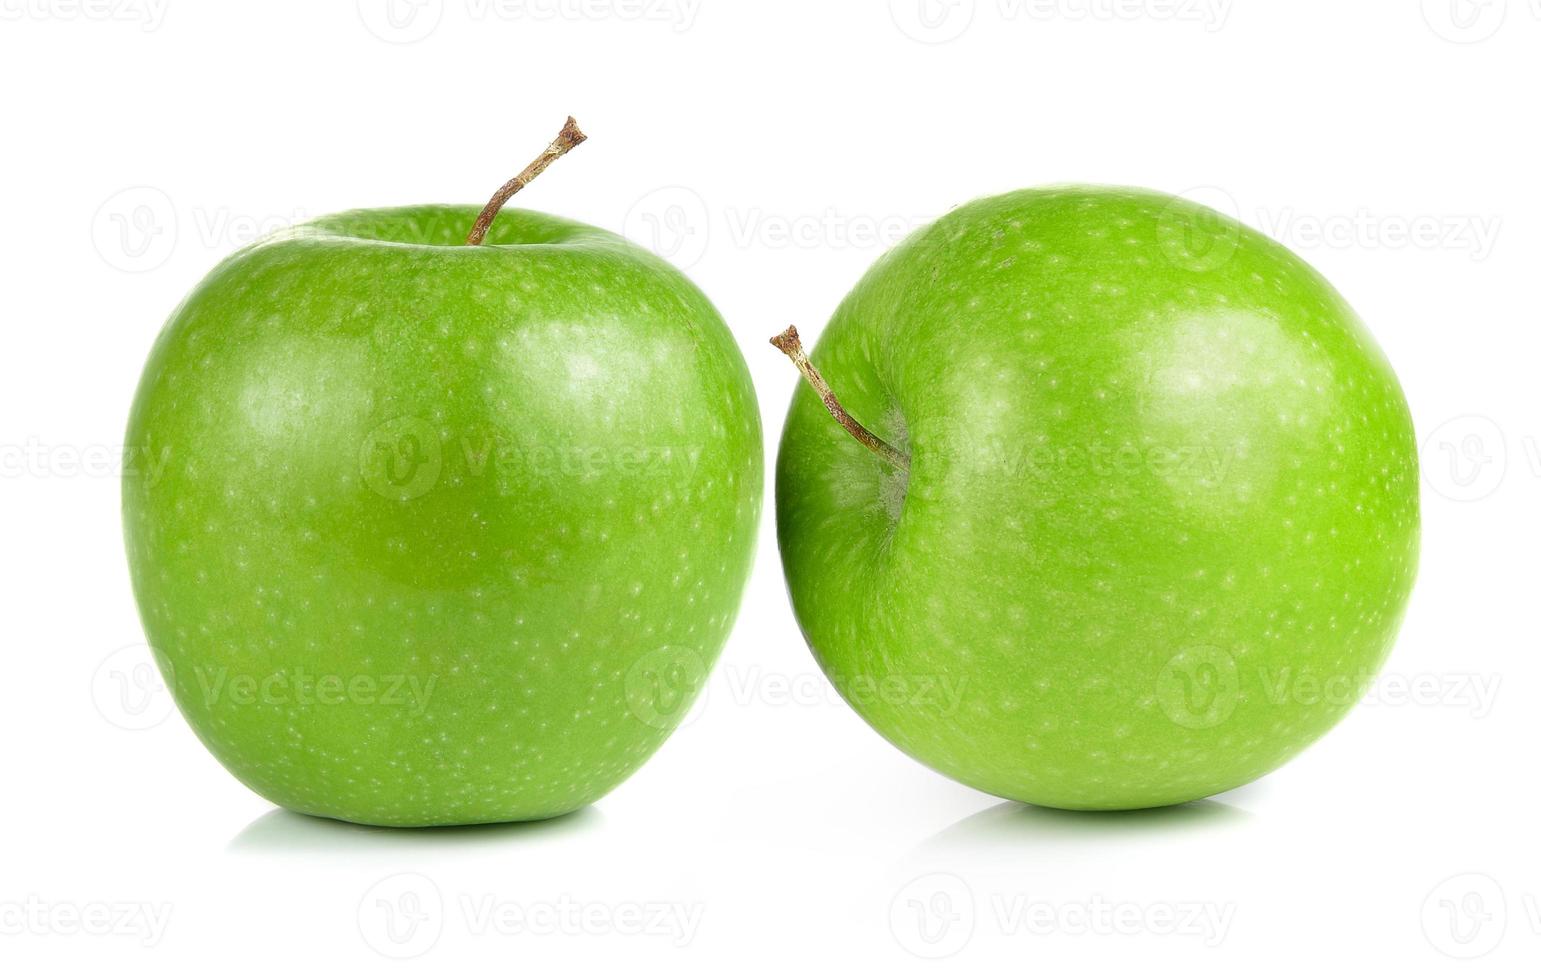 maçã verde sobre fundo branco foto